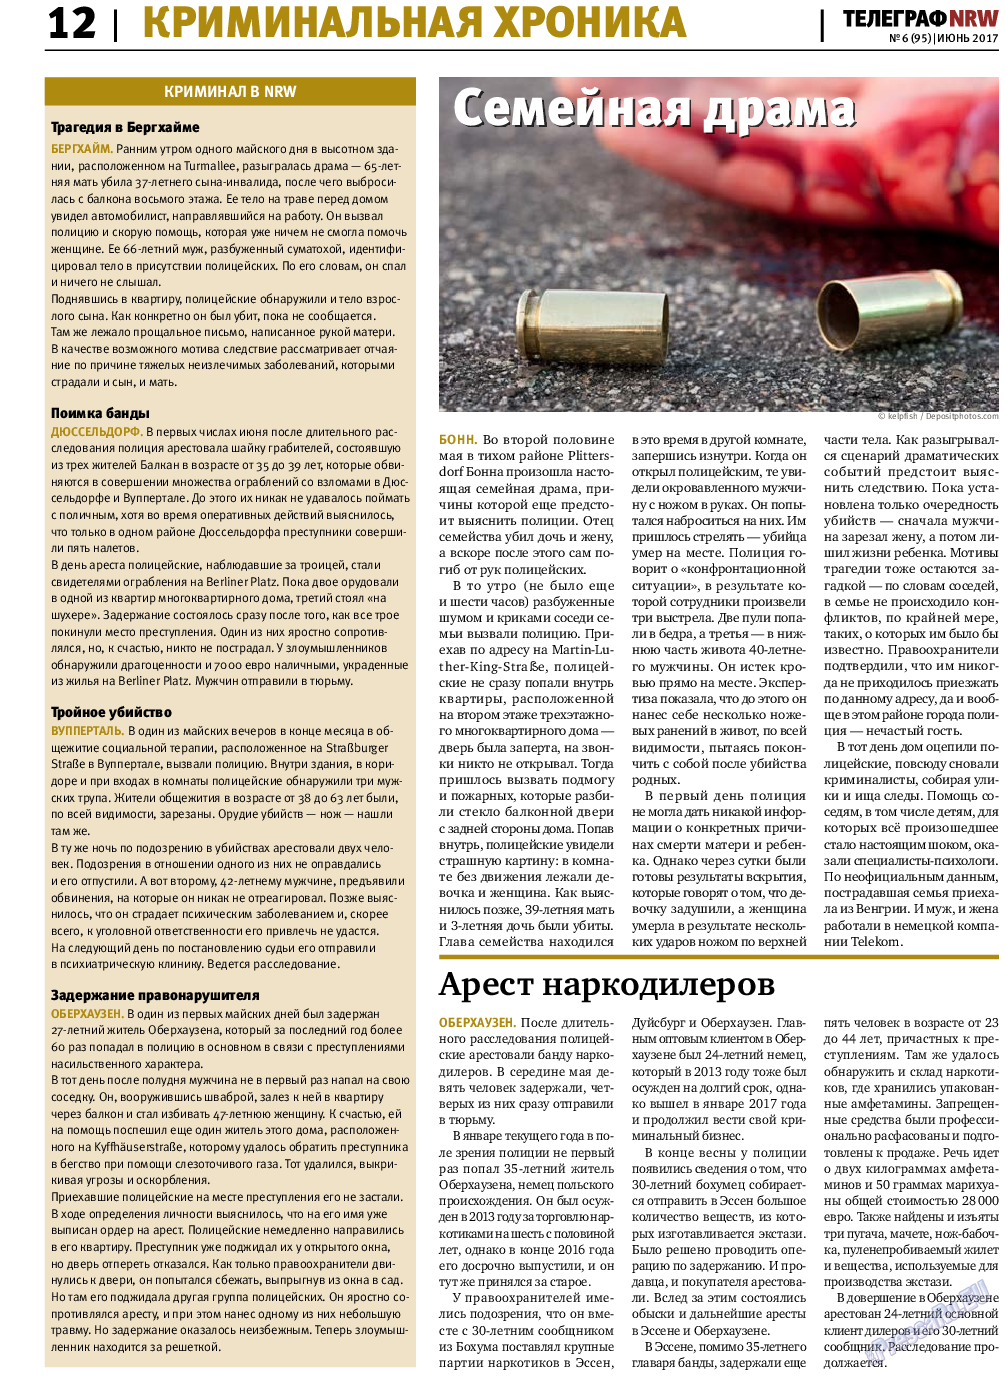 Телеграф NRW, газета. 2017 №6 стр.12